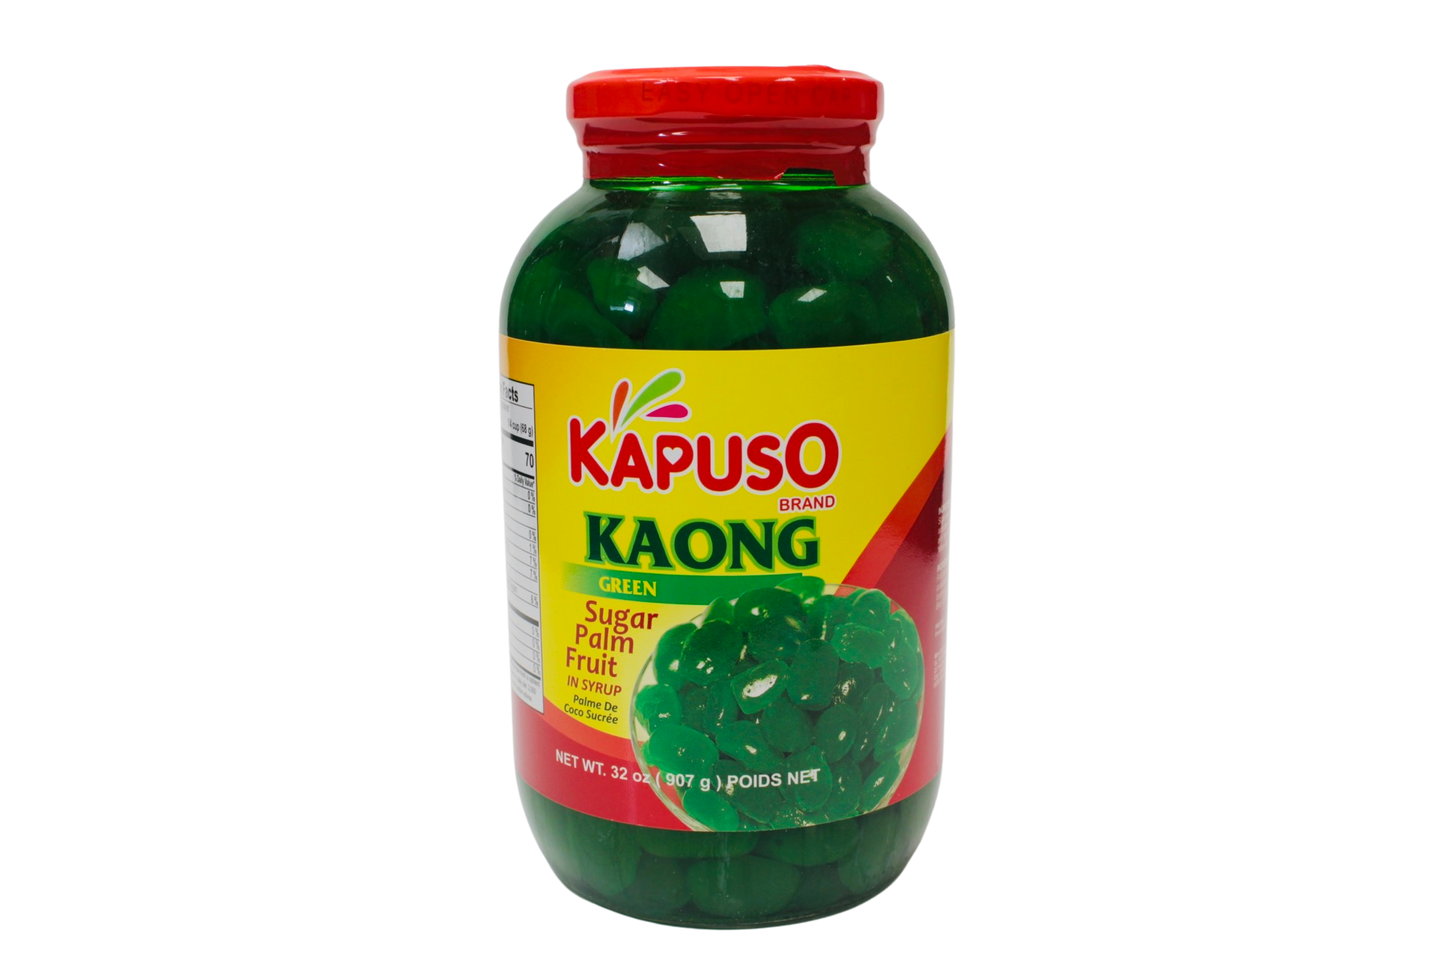 Kapuso Brand Kaong Sugar Palm Fruit In Syrup (Green) 907g